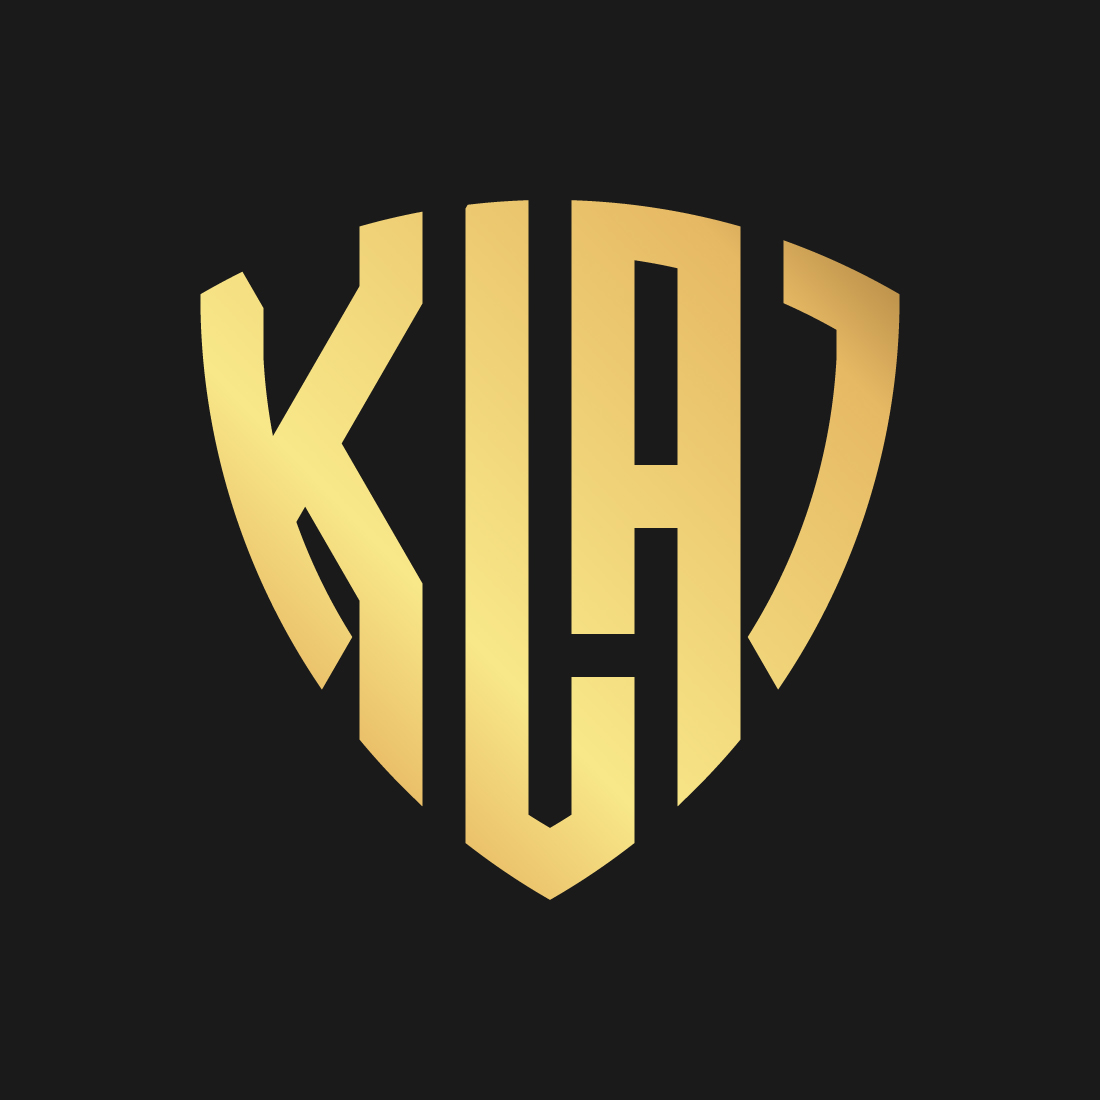 KLA logo design preview image.